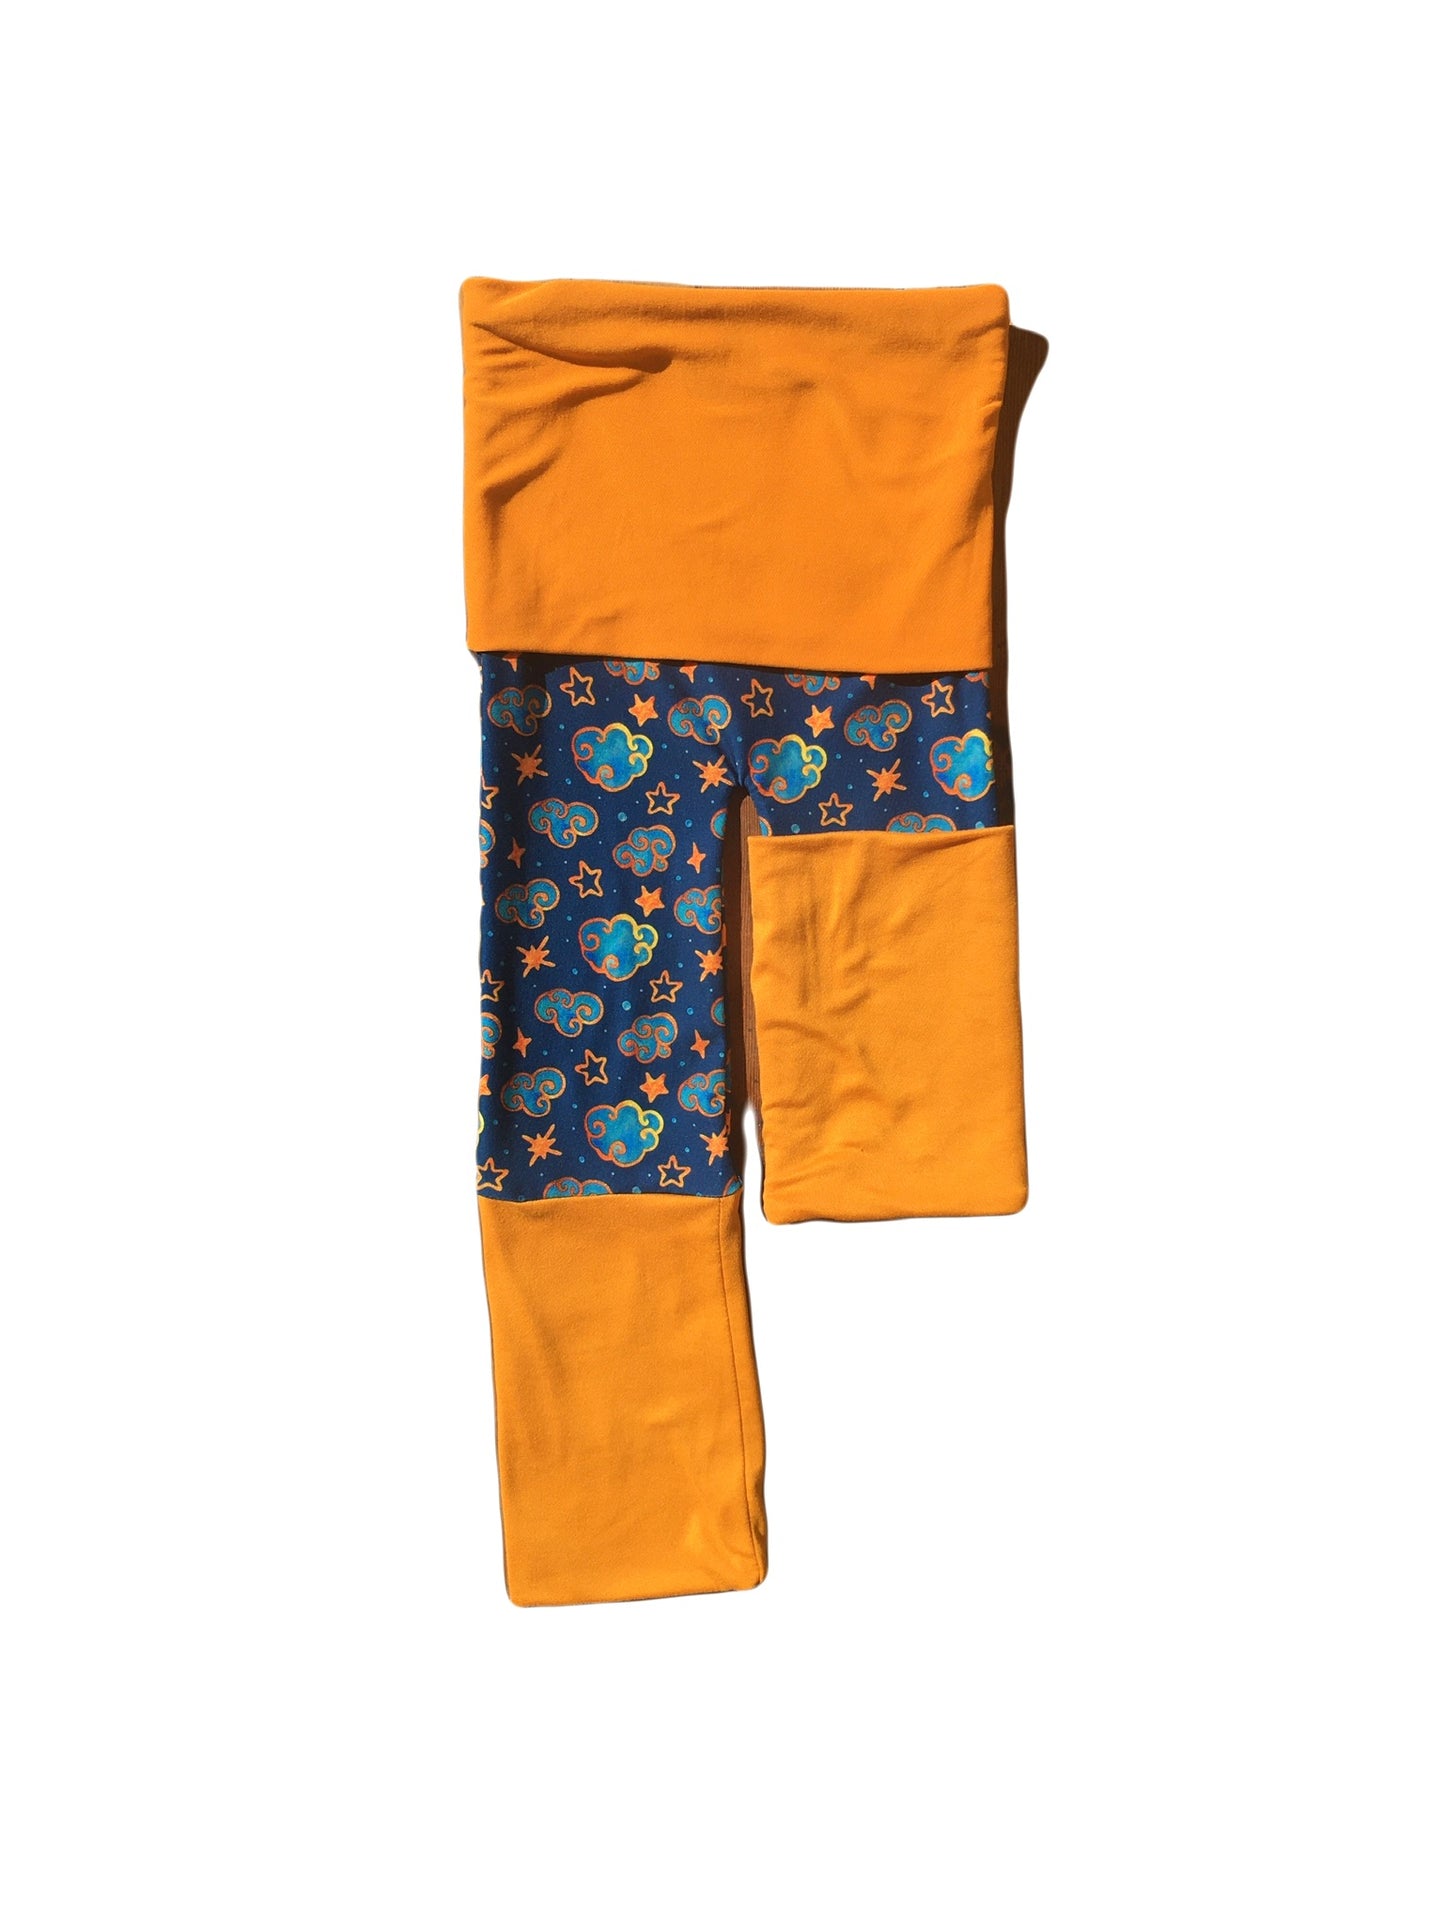 Adjustable Pants - Clouds with Mustard Orange